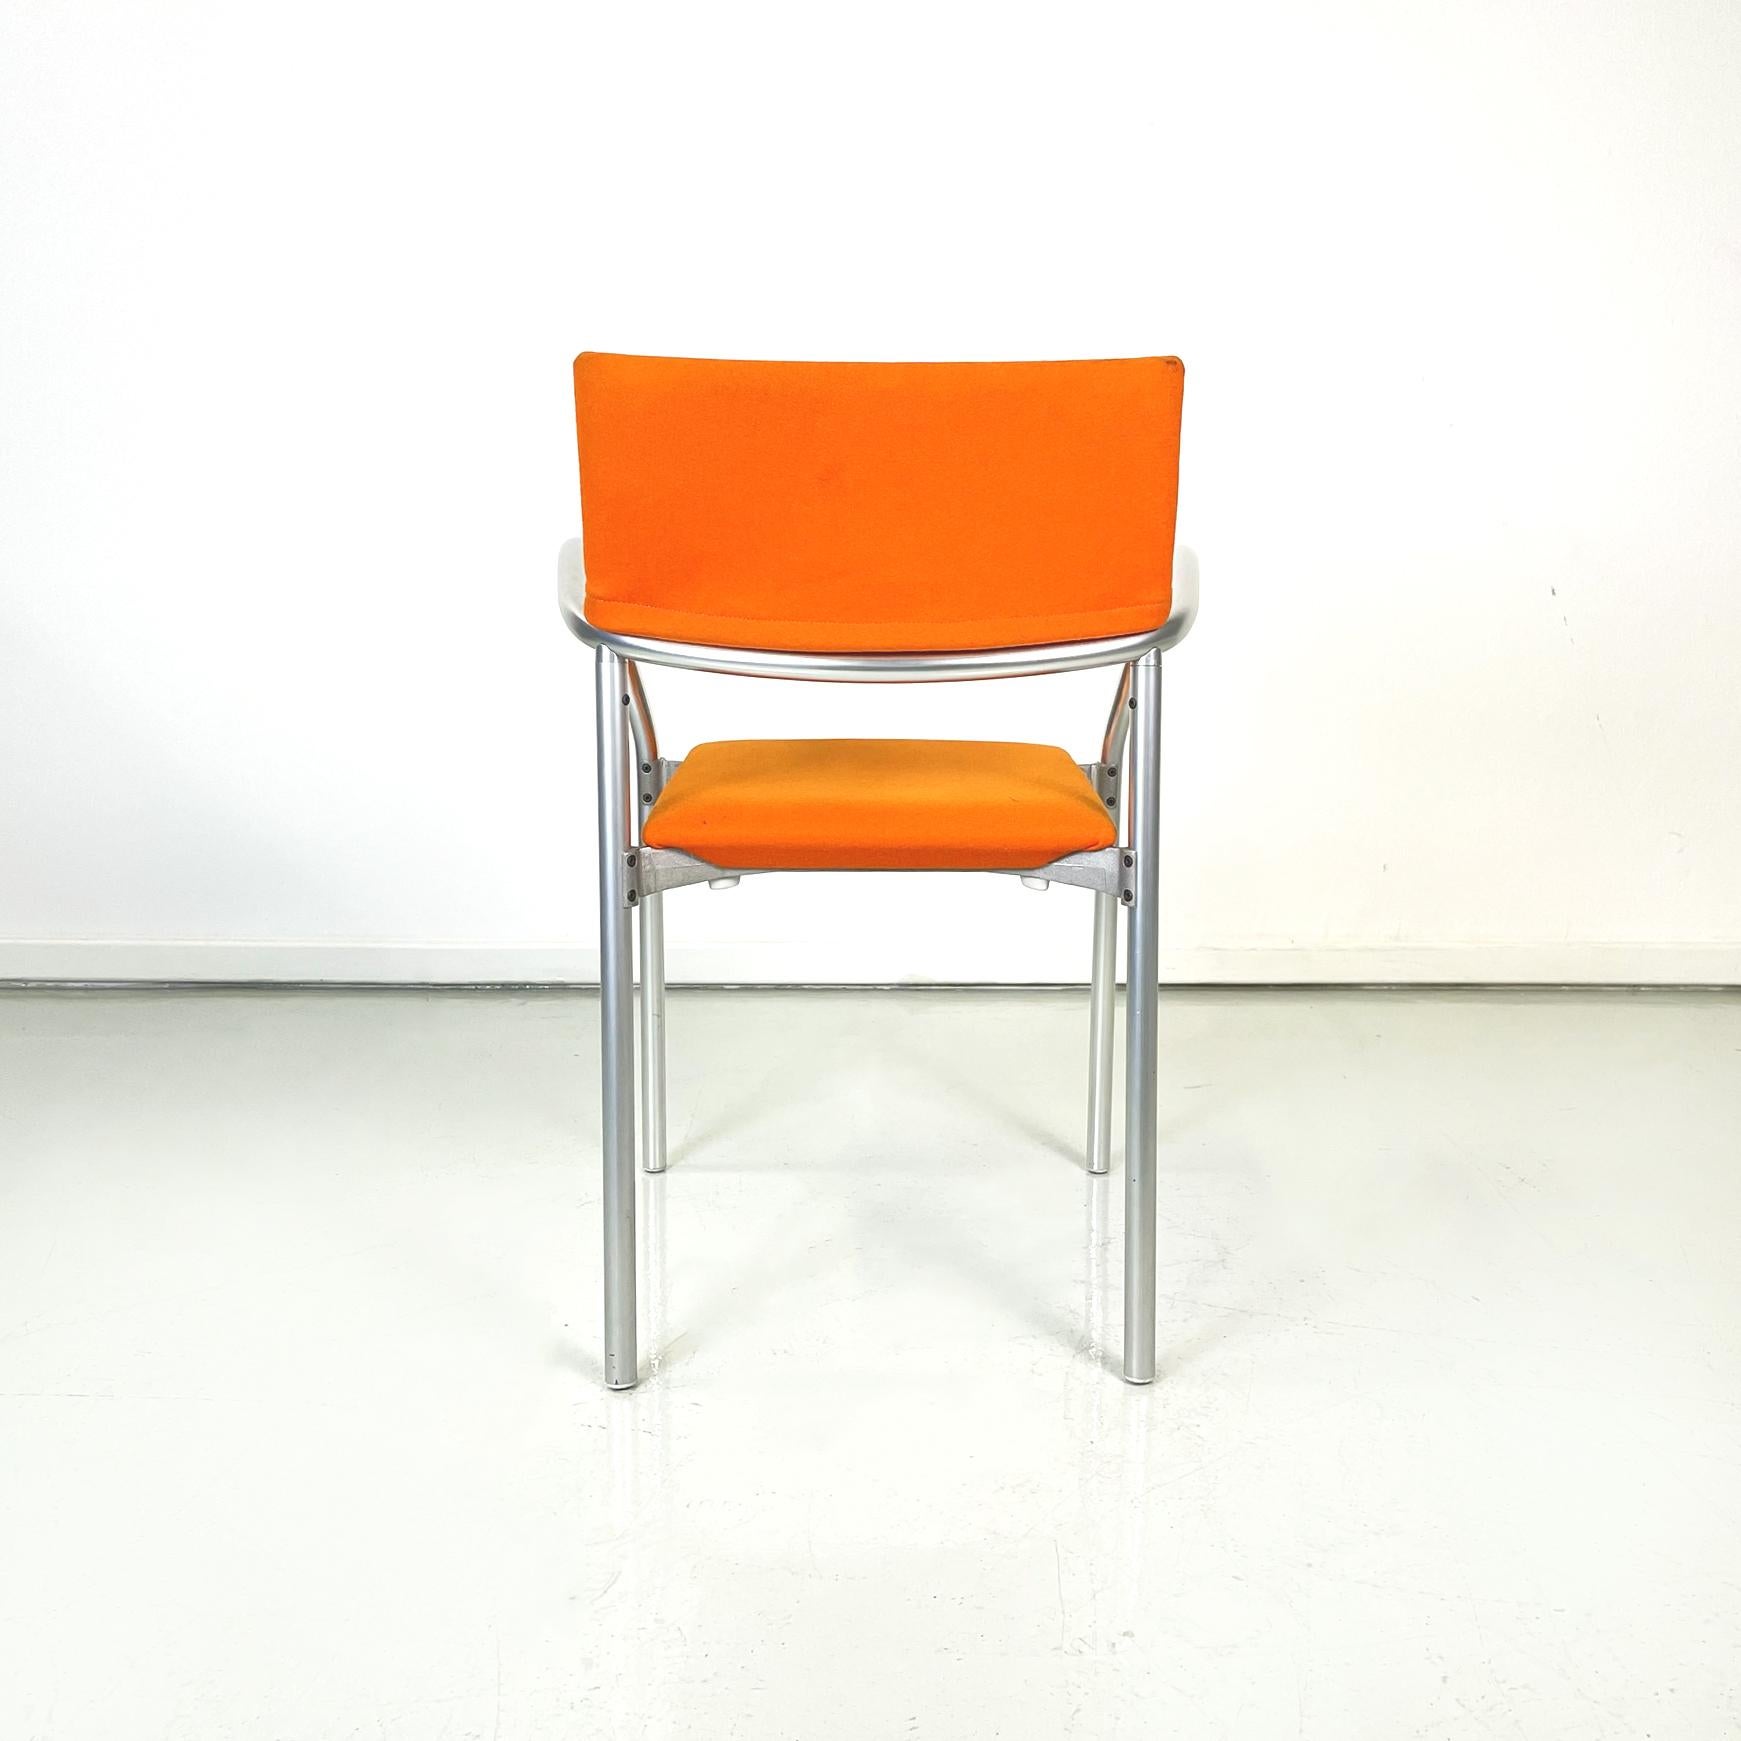 Italian Modern Orange Fabric Chairs Mod, Breeze by Bartoli for Segis, 1980s For Sale 1